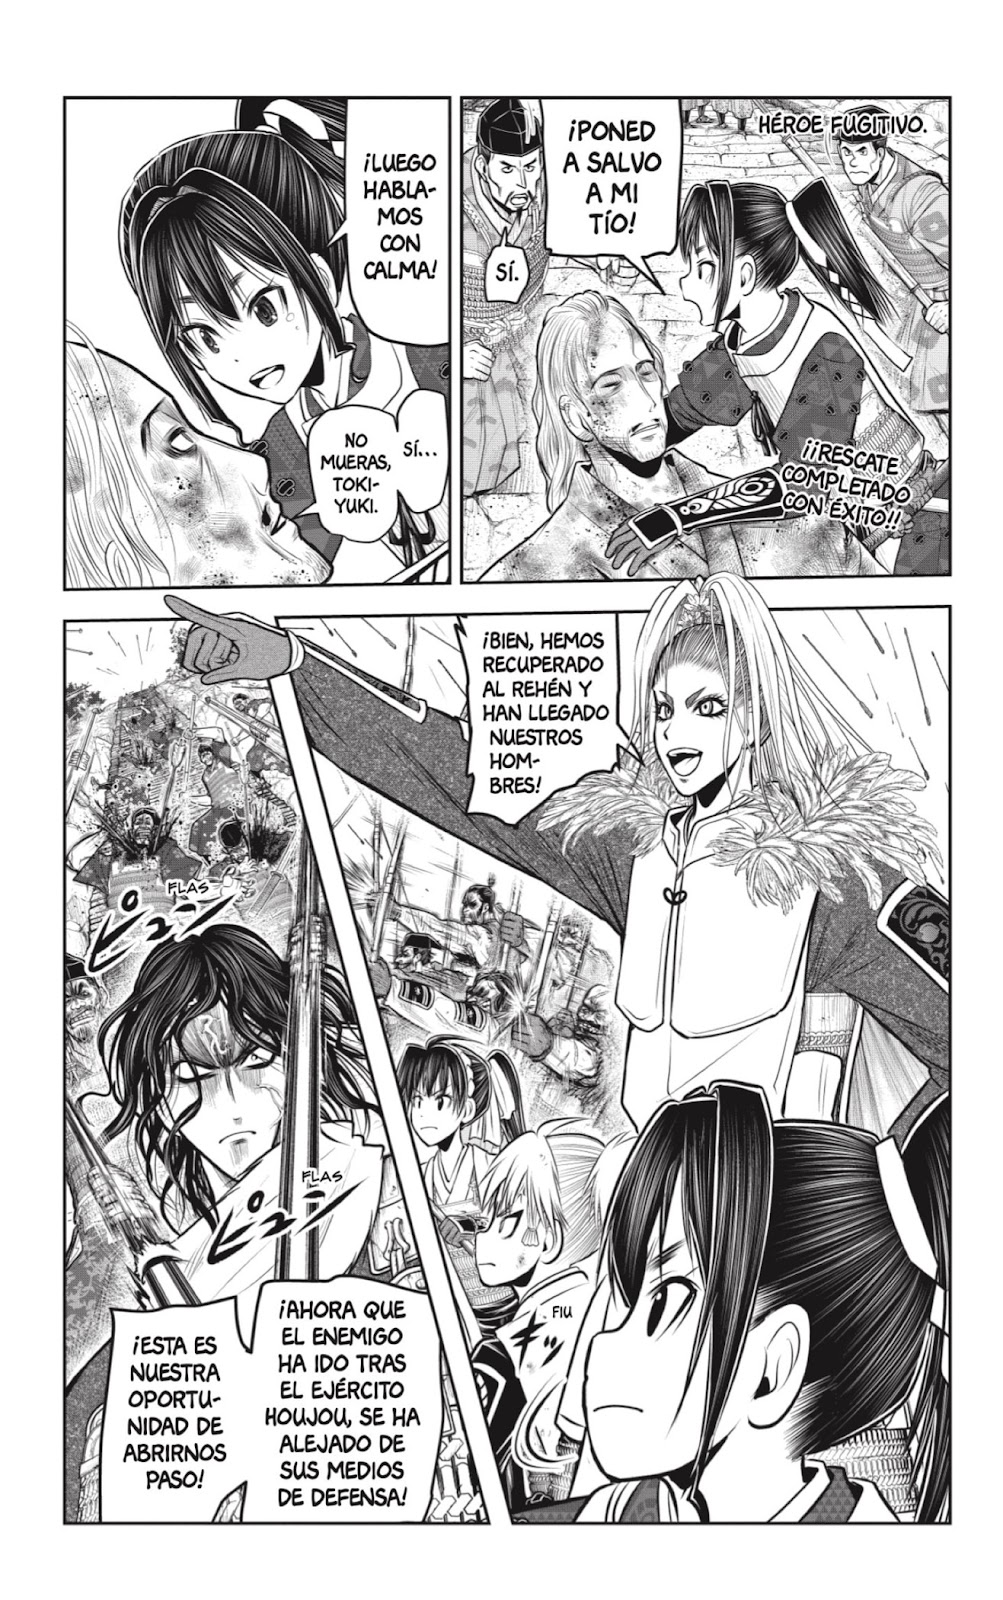 El samurái elusivo: Chapter 127 - Page 1